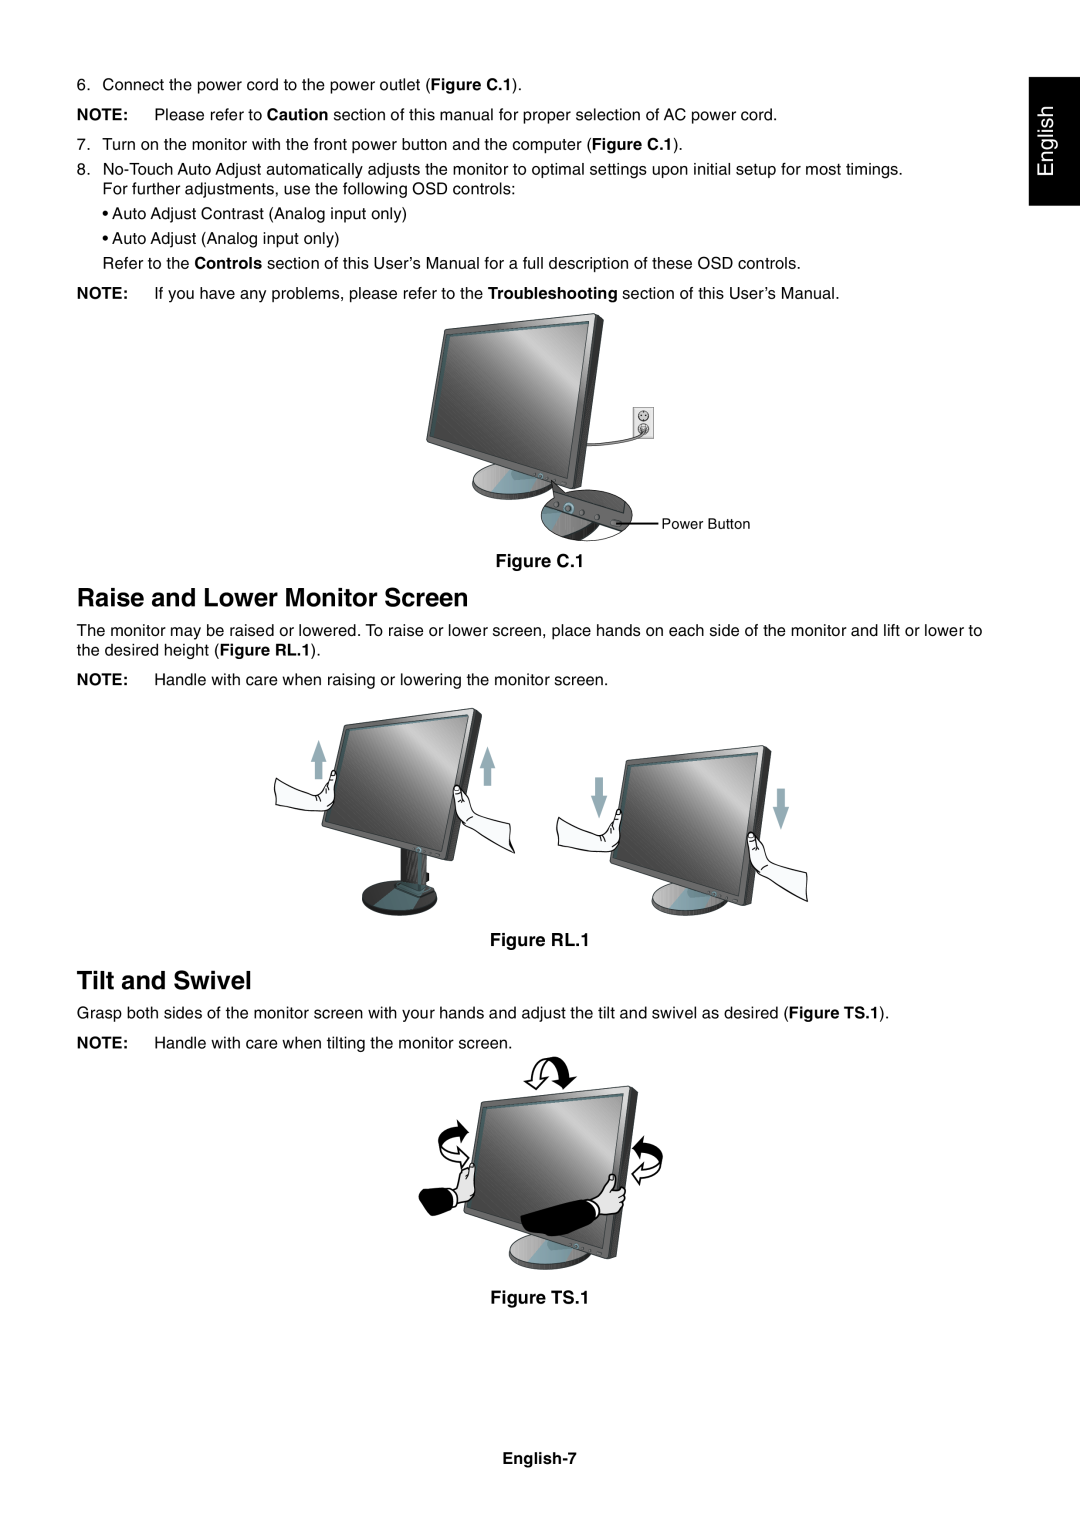 NEC L227HR user manual Raise and Lower Monitor Screen, Tilt and Swivel, Figure C.1, Figure RL.1, Figure TS.1, English-7 